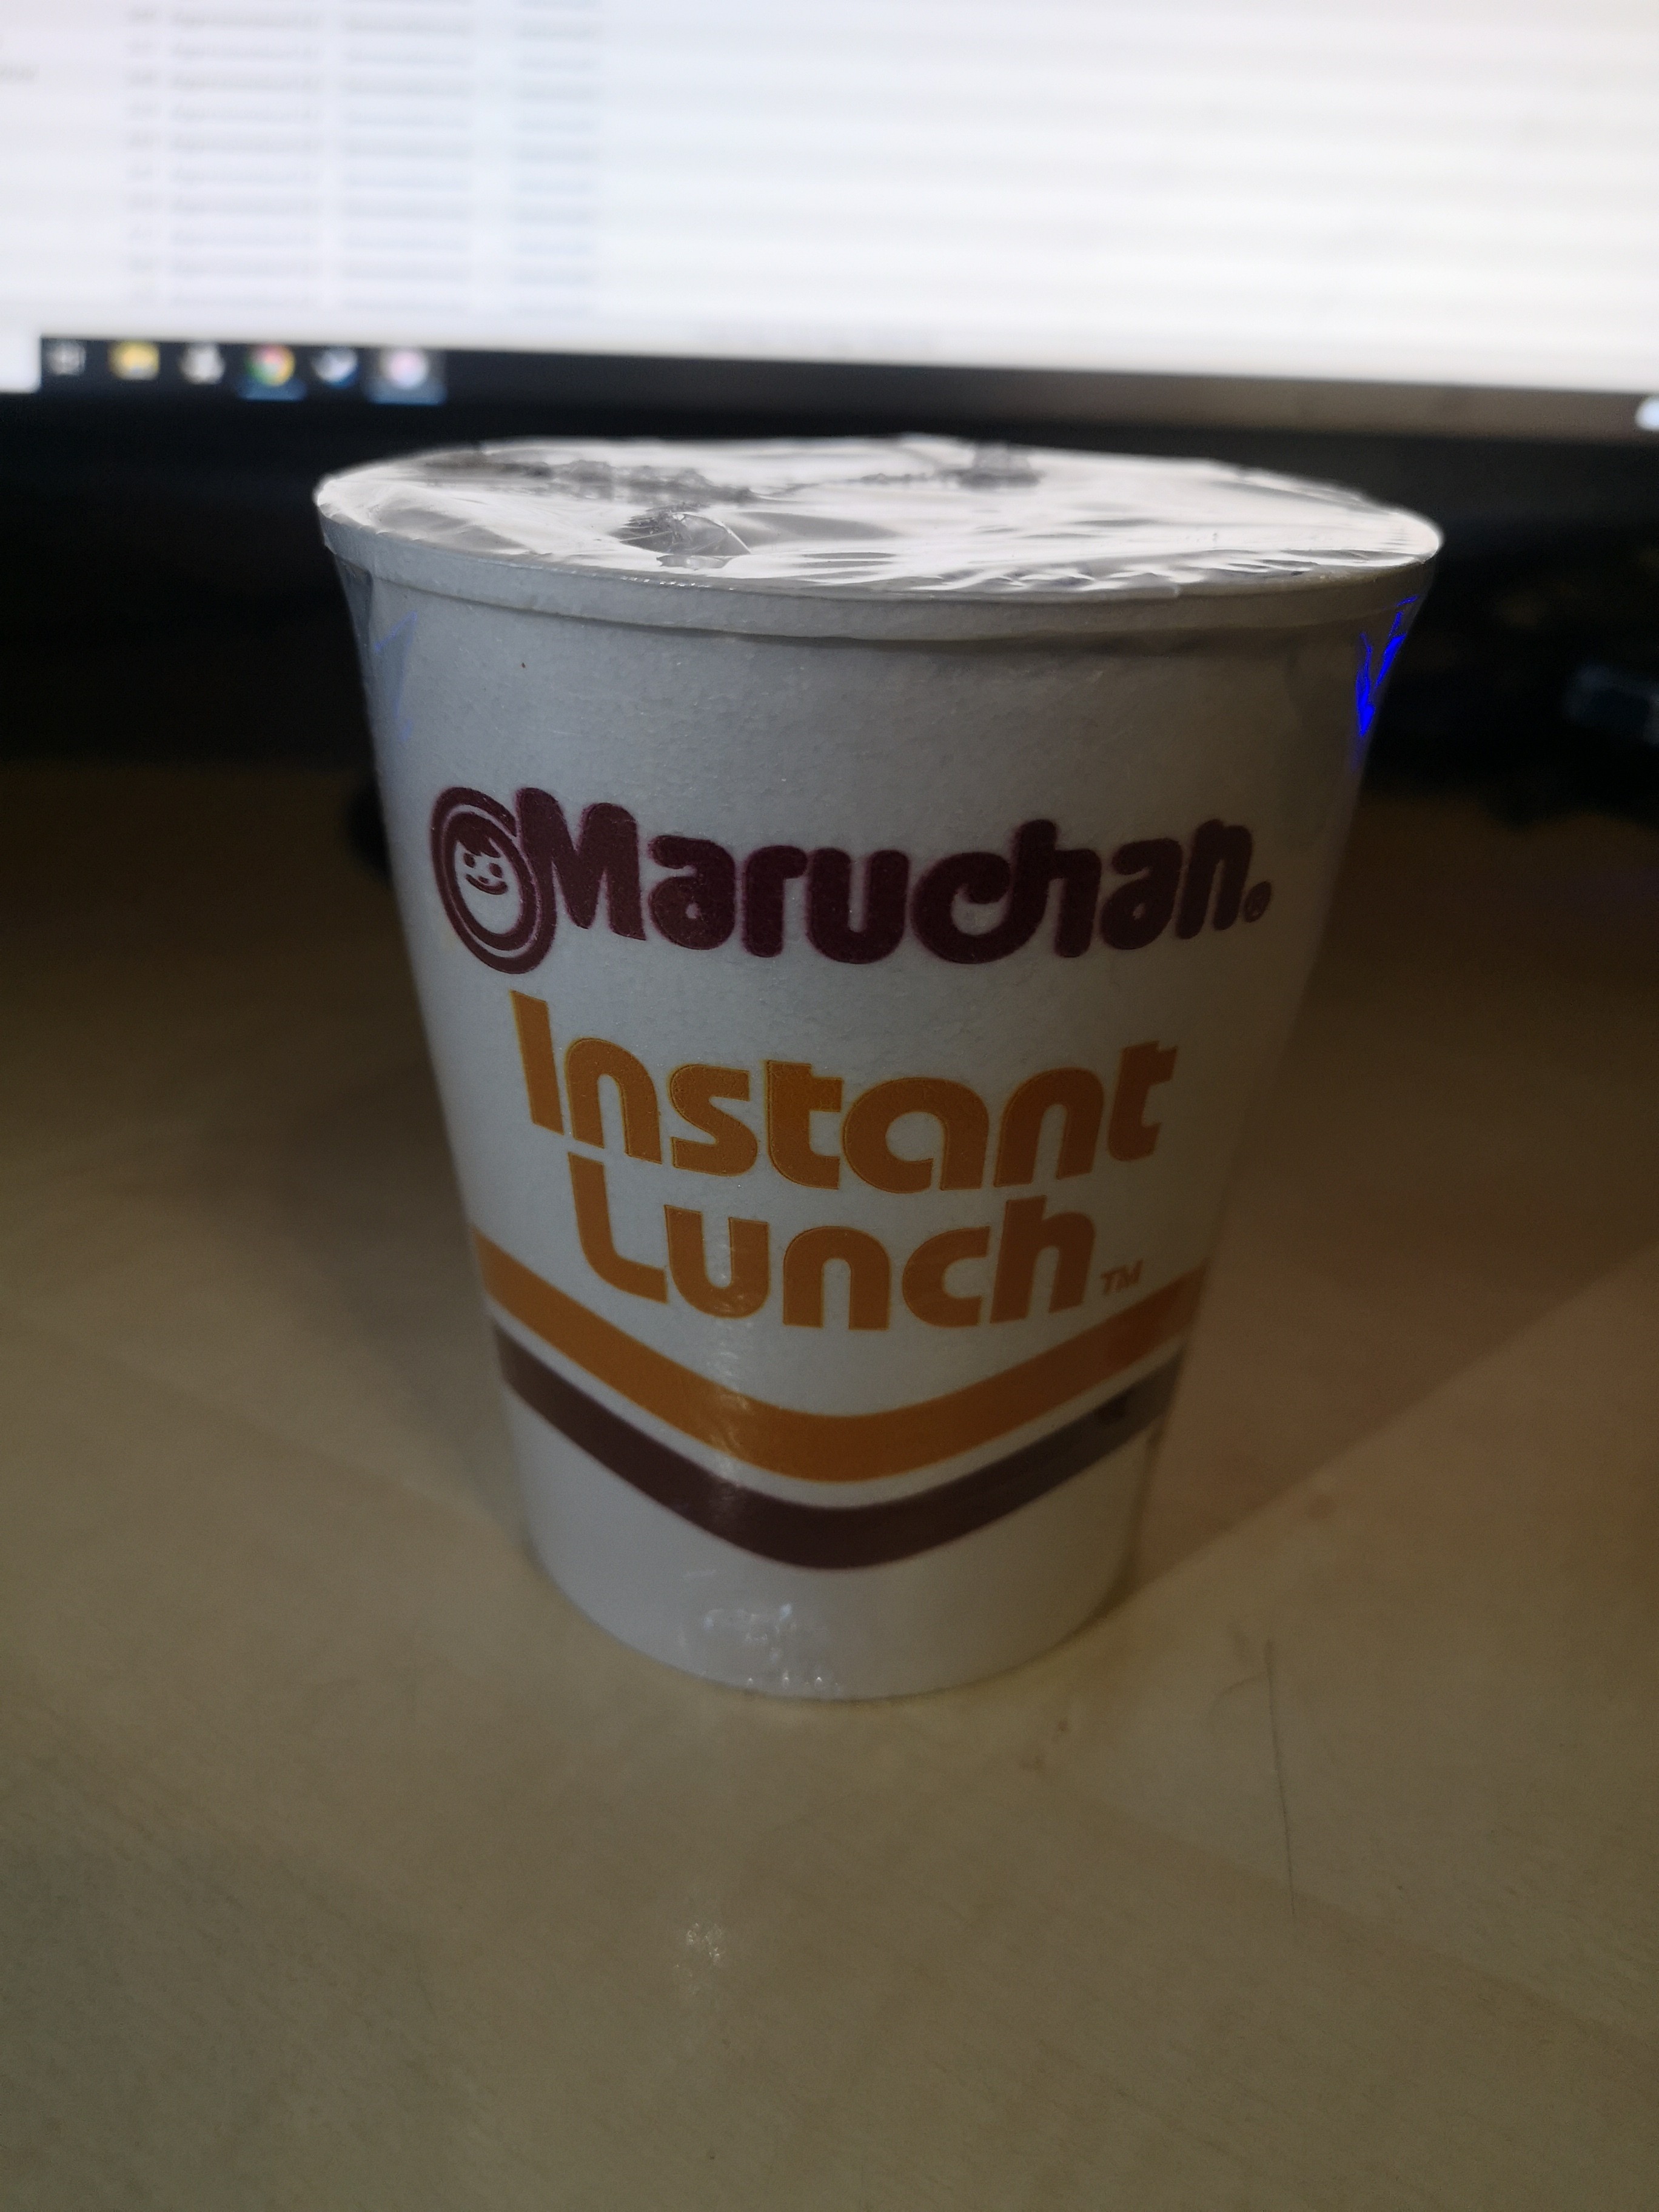 #2159: Maruchan Instant Lunch "Hot & Spicy Flavor with Shrimp" Ramen Noodle Soup